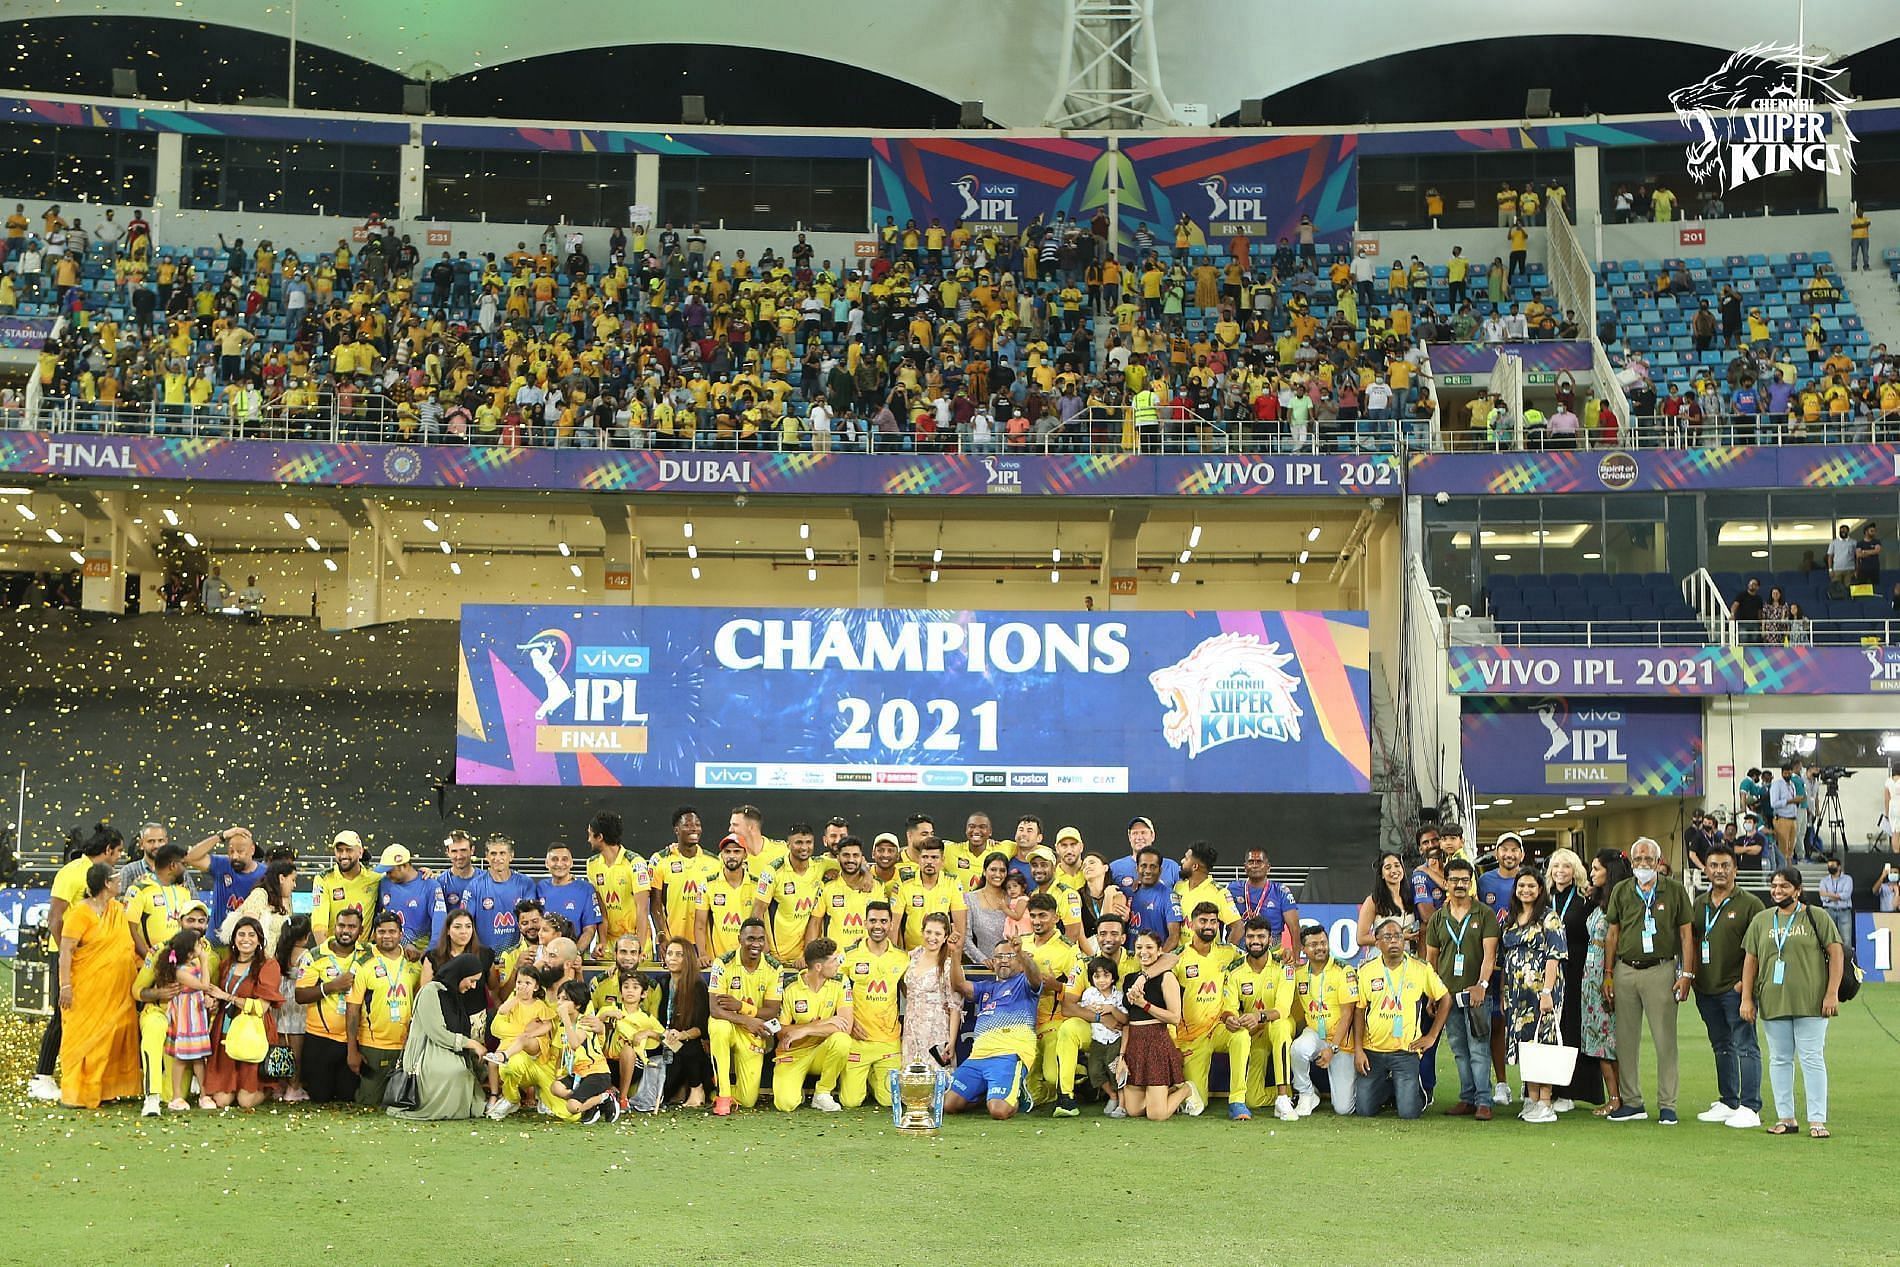 Chennai Super Kings (CSK) celebrate after winning IPL 2021. Pic: IPLT20.COM